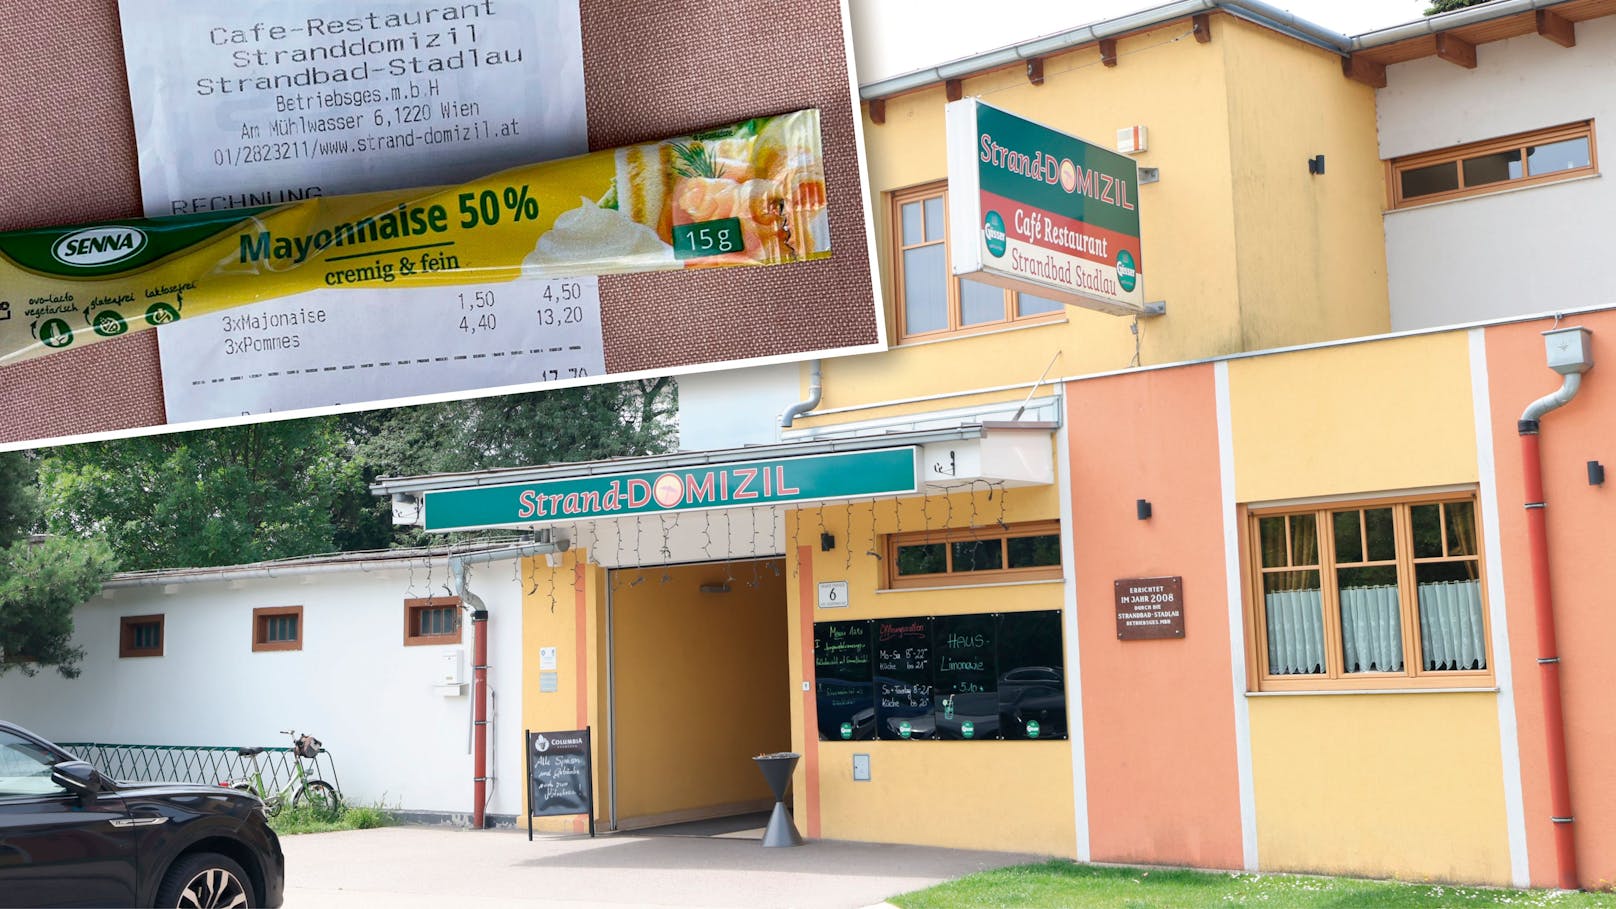 "Wucher" – Stranddomizil verlangt 1,50 € für Mini-Mayo